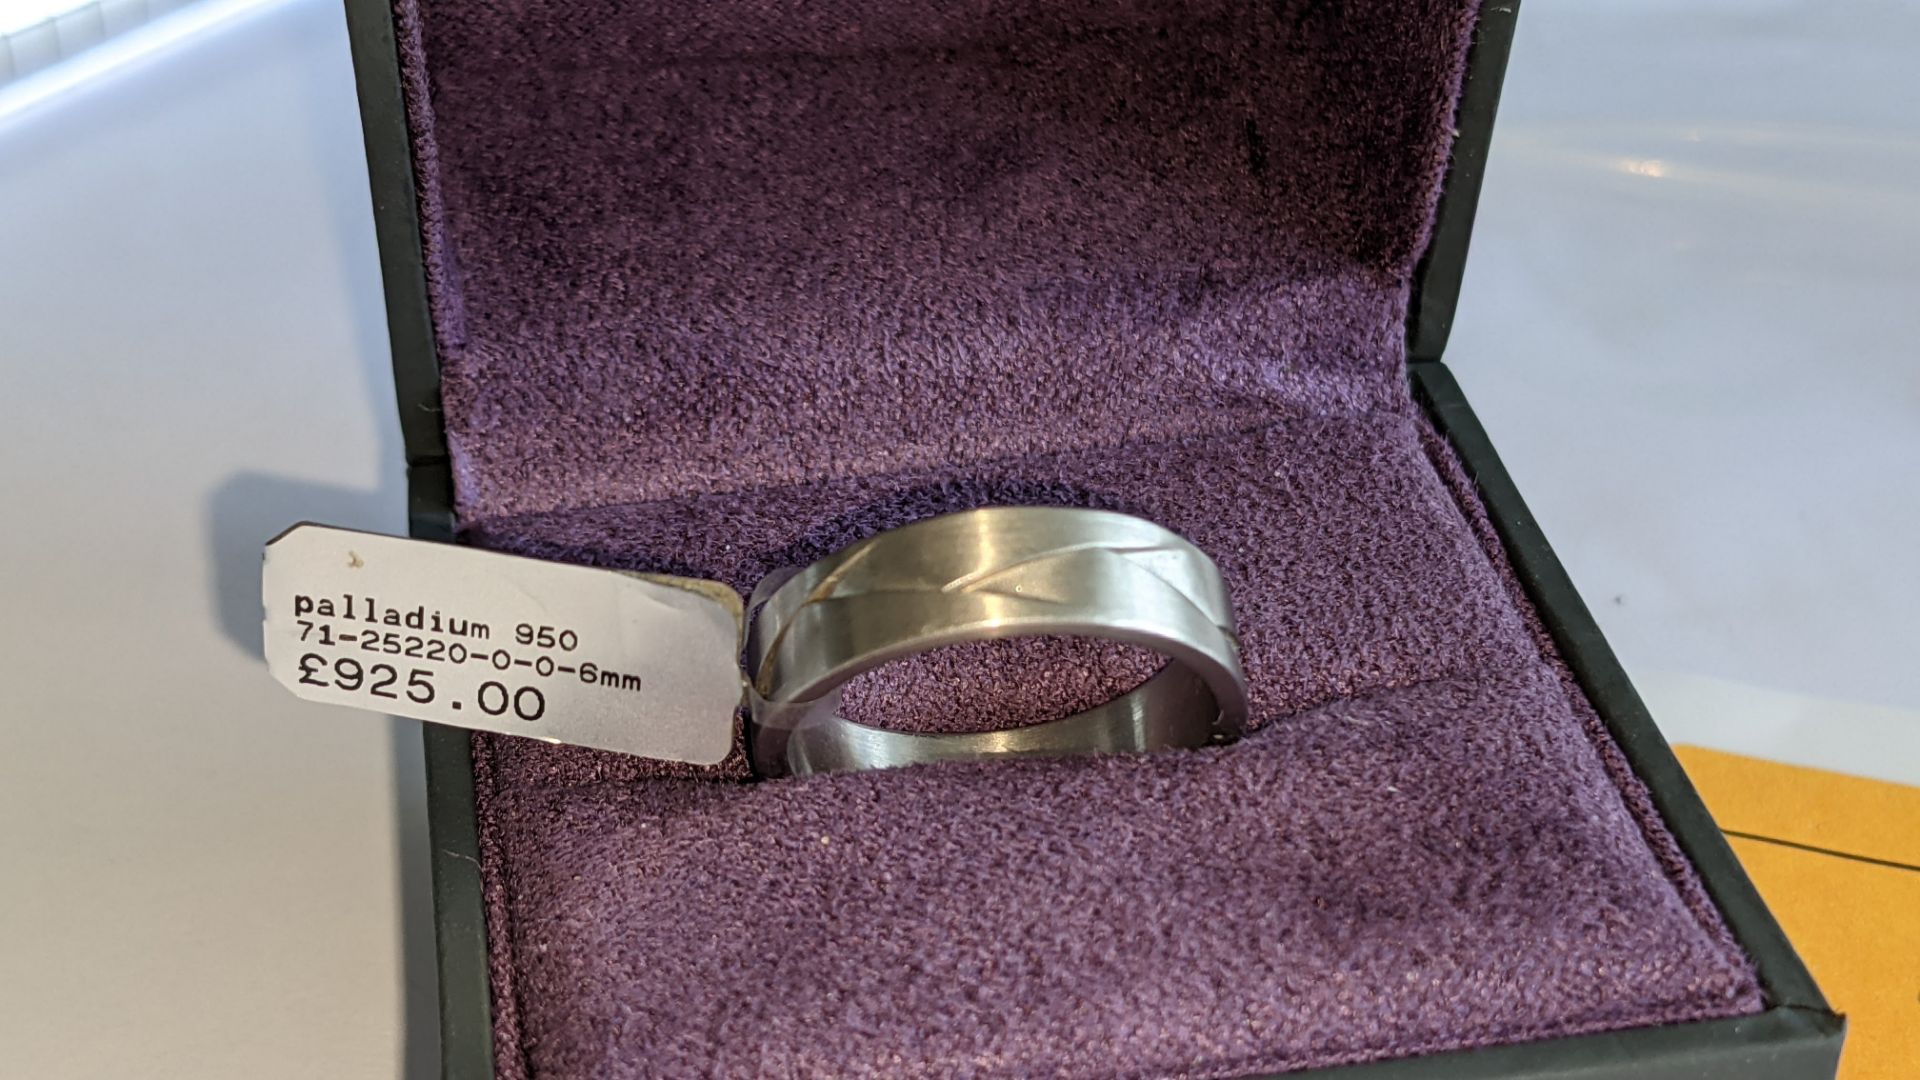 Palladium 950 6mm woven ring. RRP £925 - Image 3 of 14